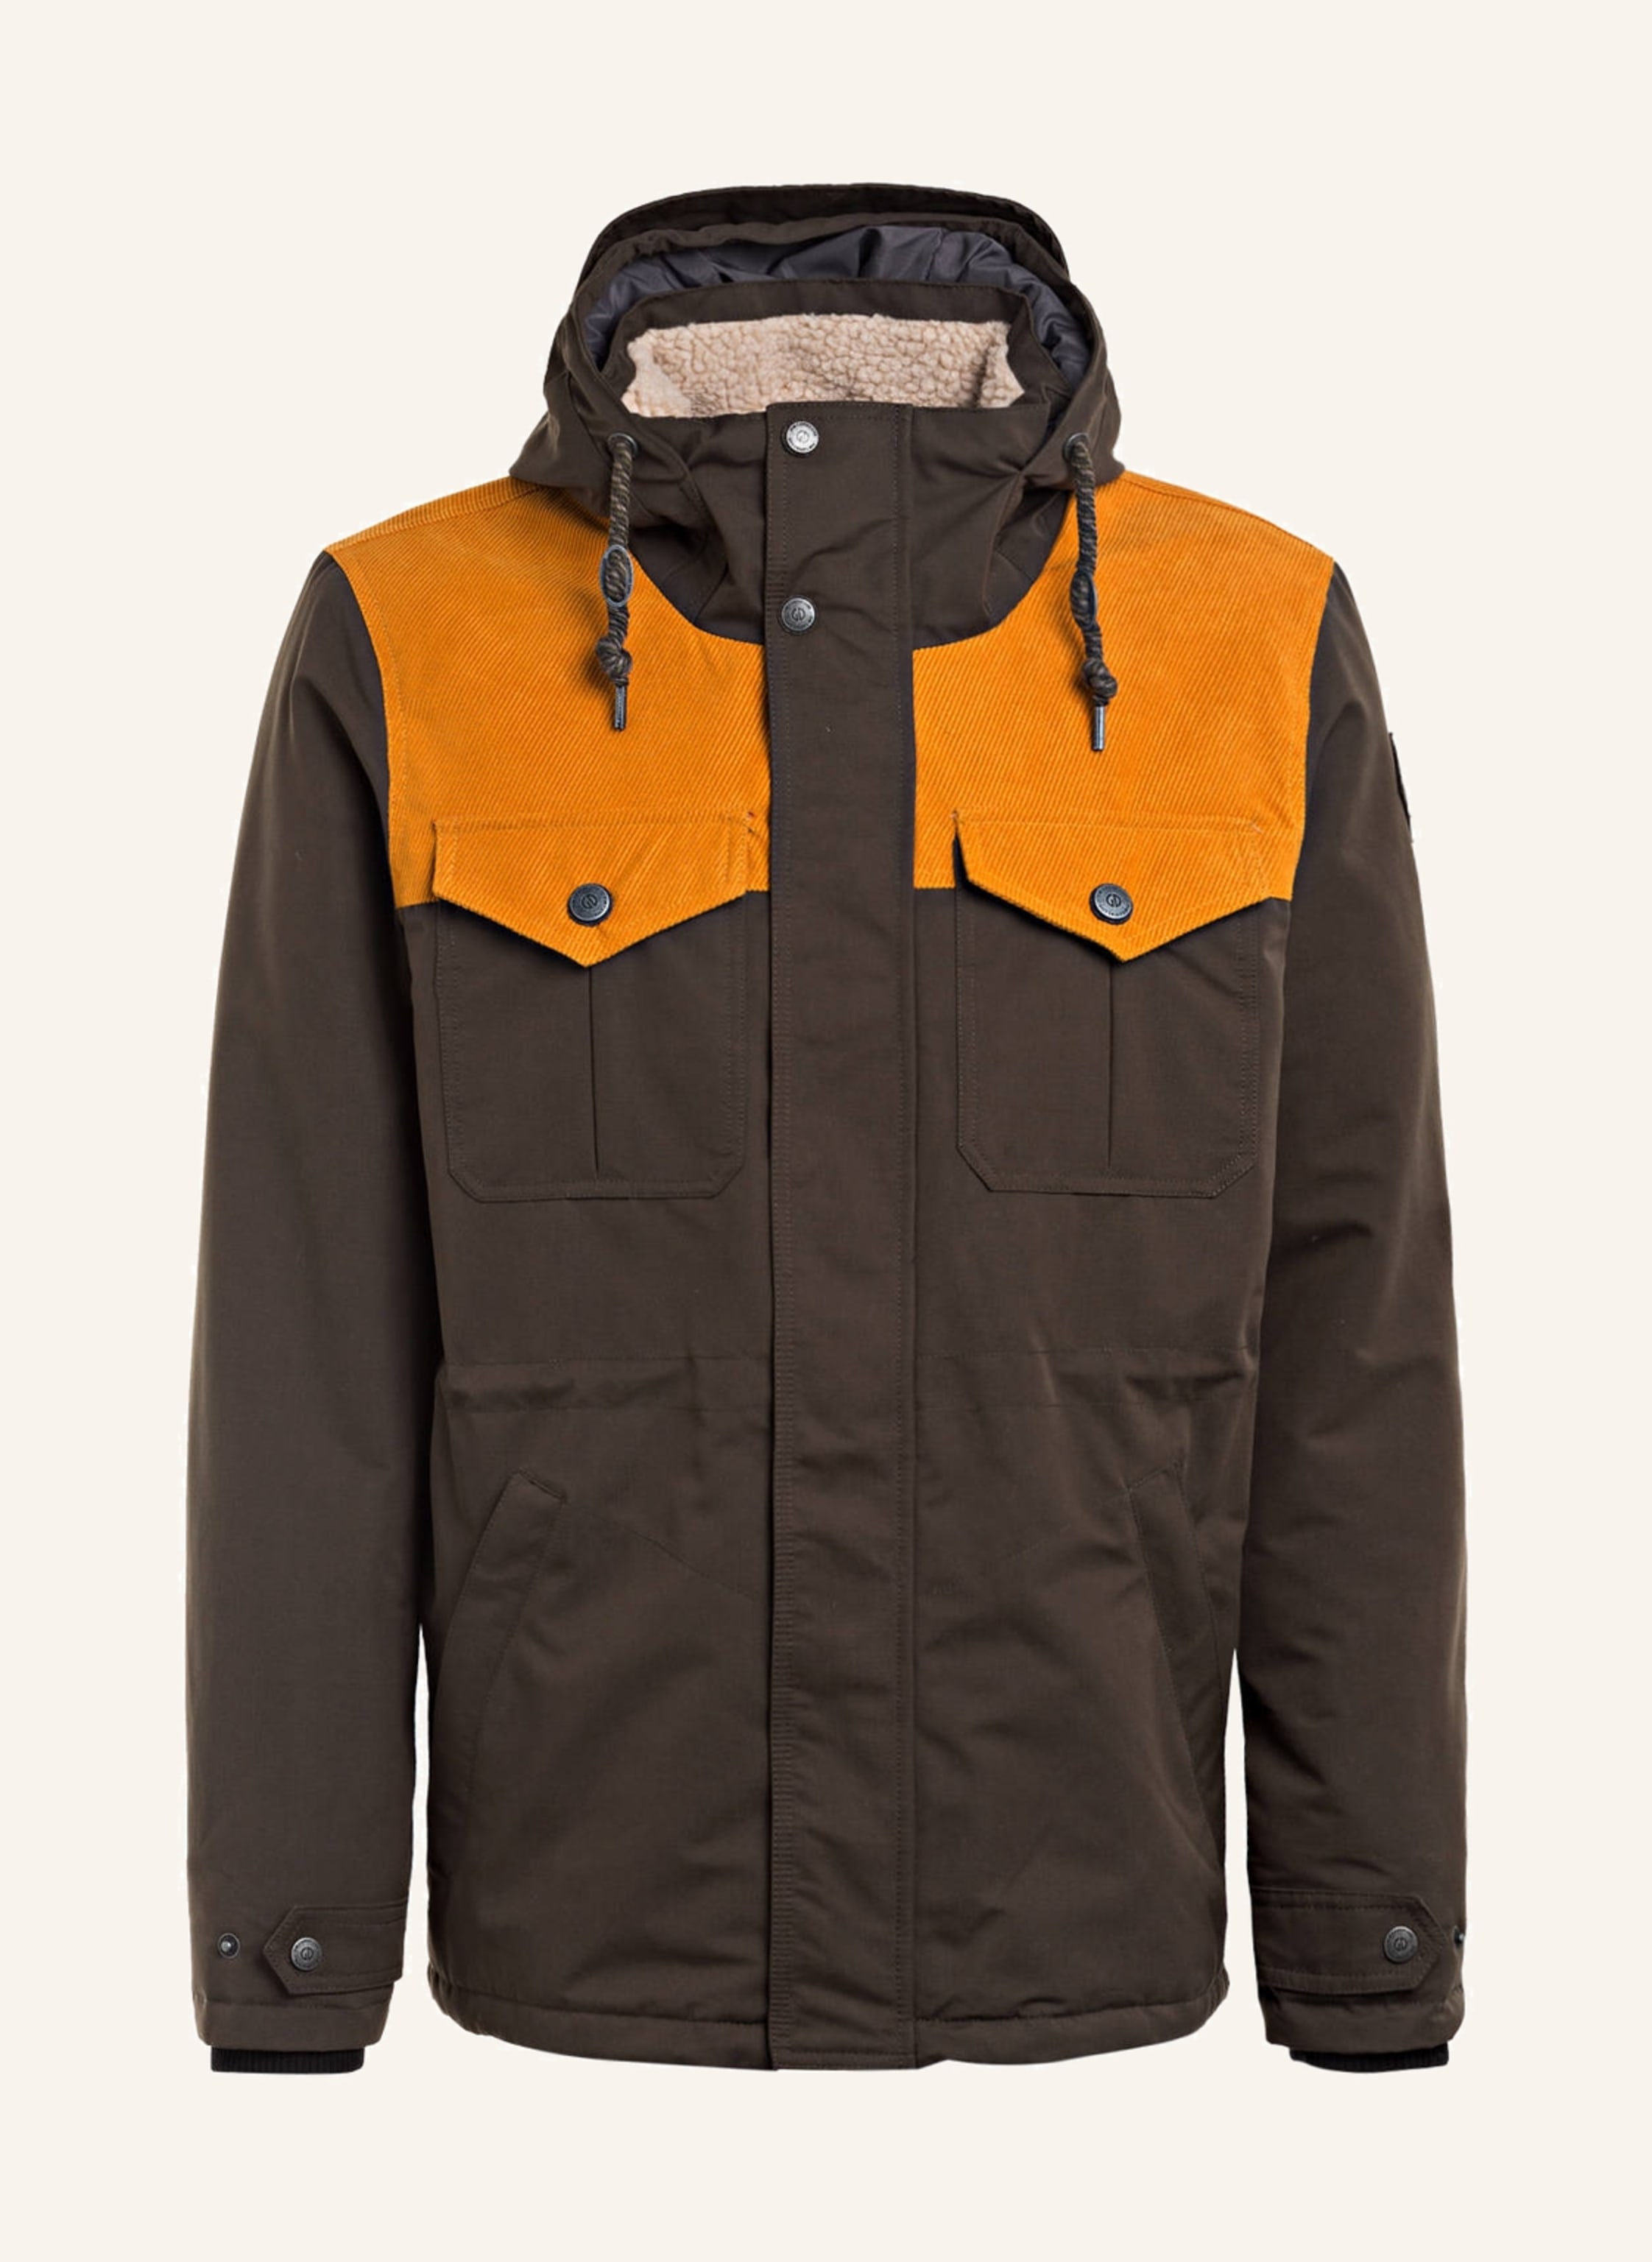 G.I.G.A. DX jacket brown/ STORMIGA by orange killtec dark in Outdoor